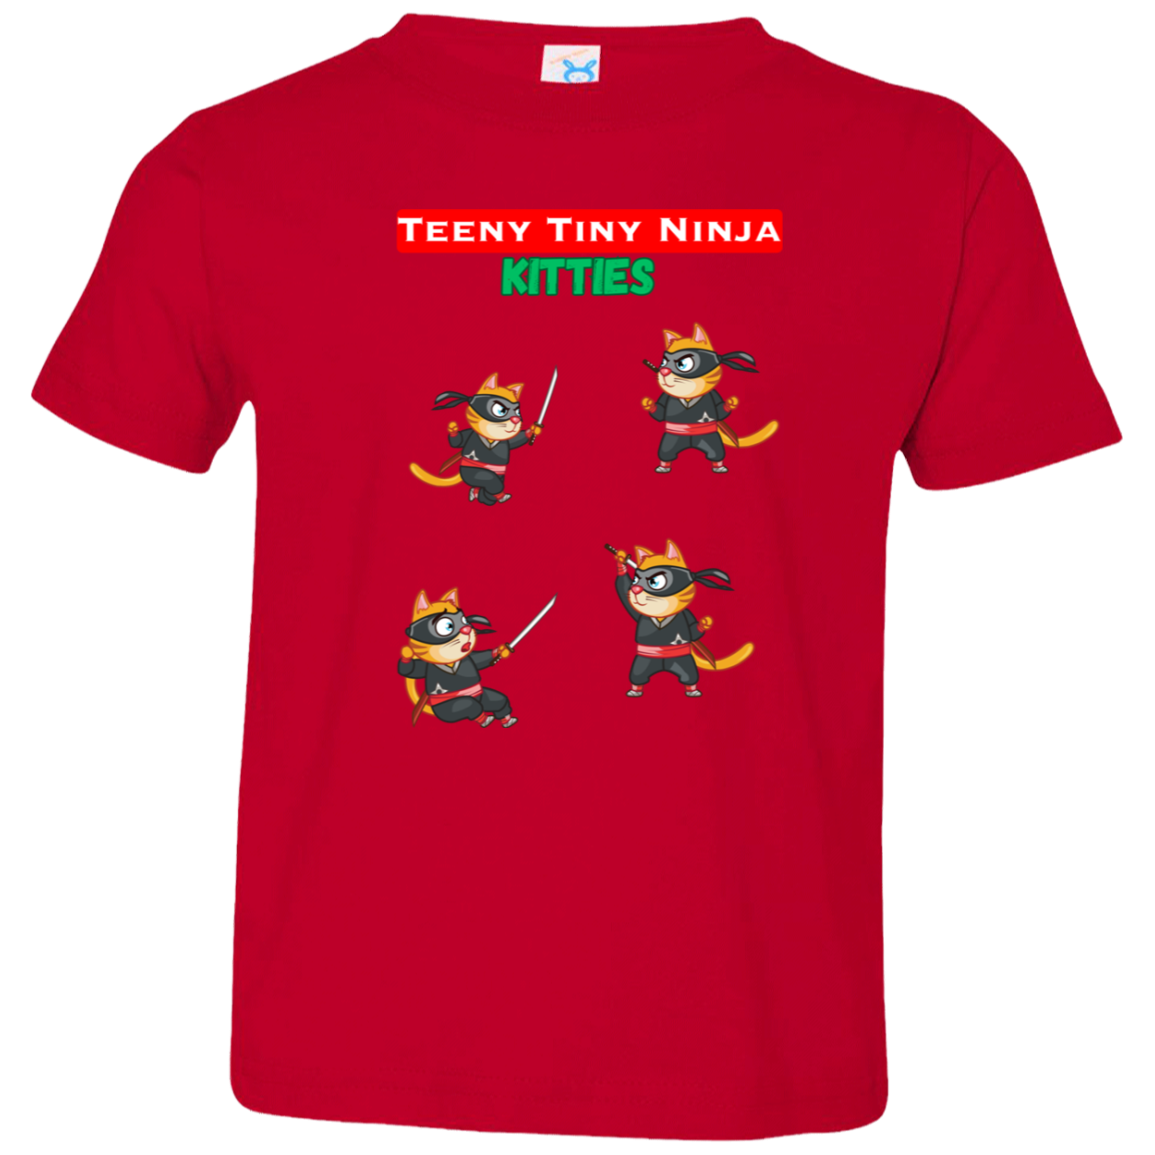 Teeny Tiny Ninja Kitties - Unisex Toddler Jersey T-Shirt